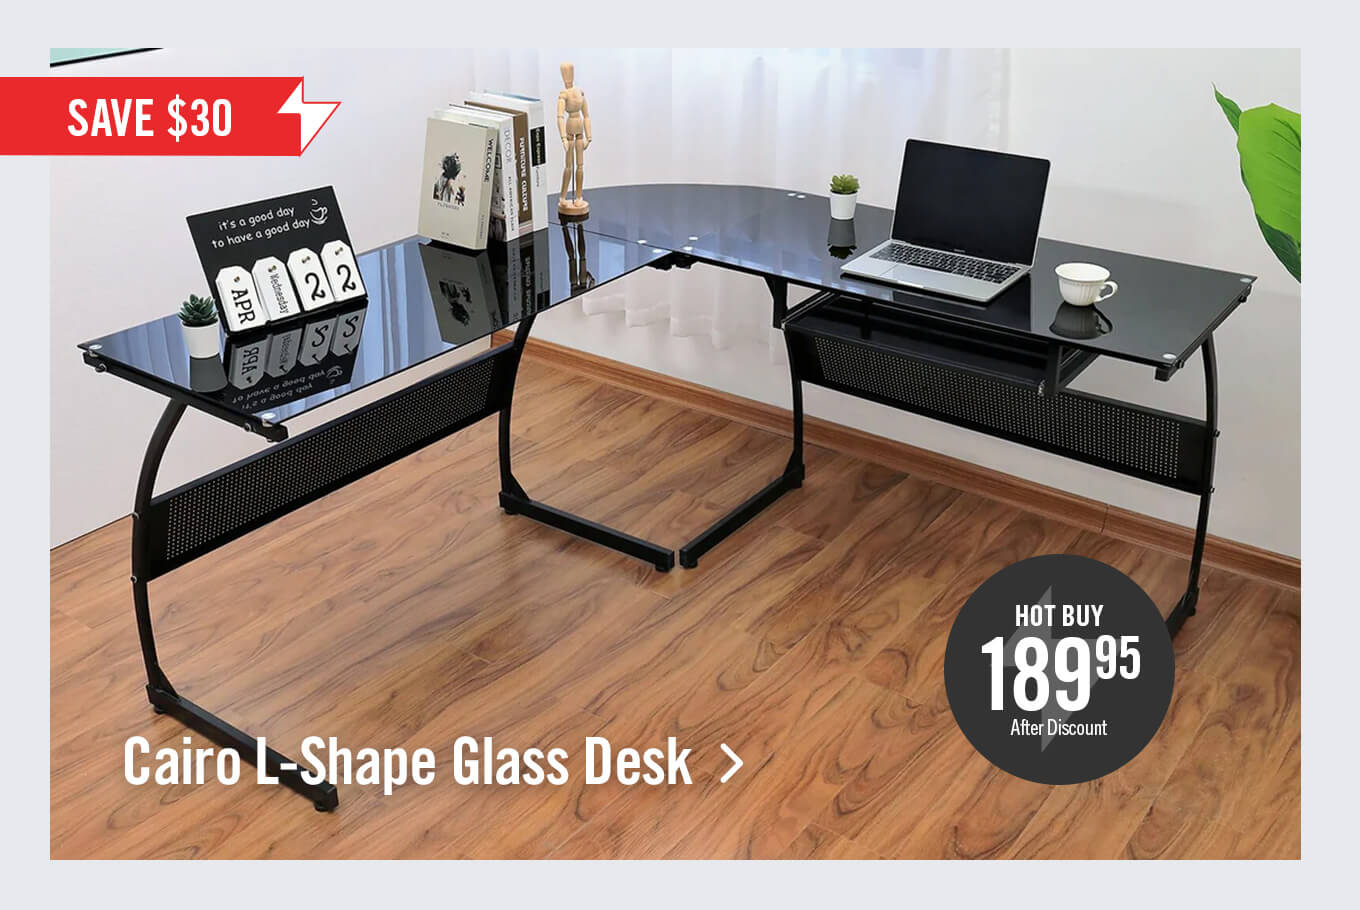 Cairo L-Shape Glass Desk.